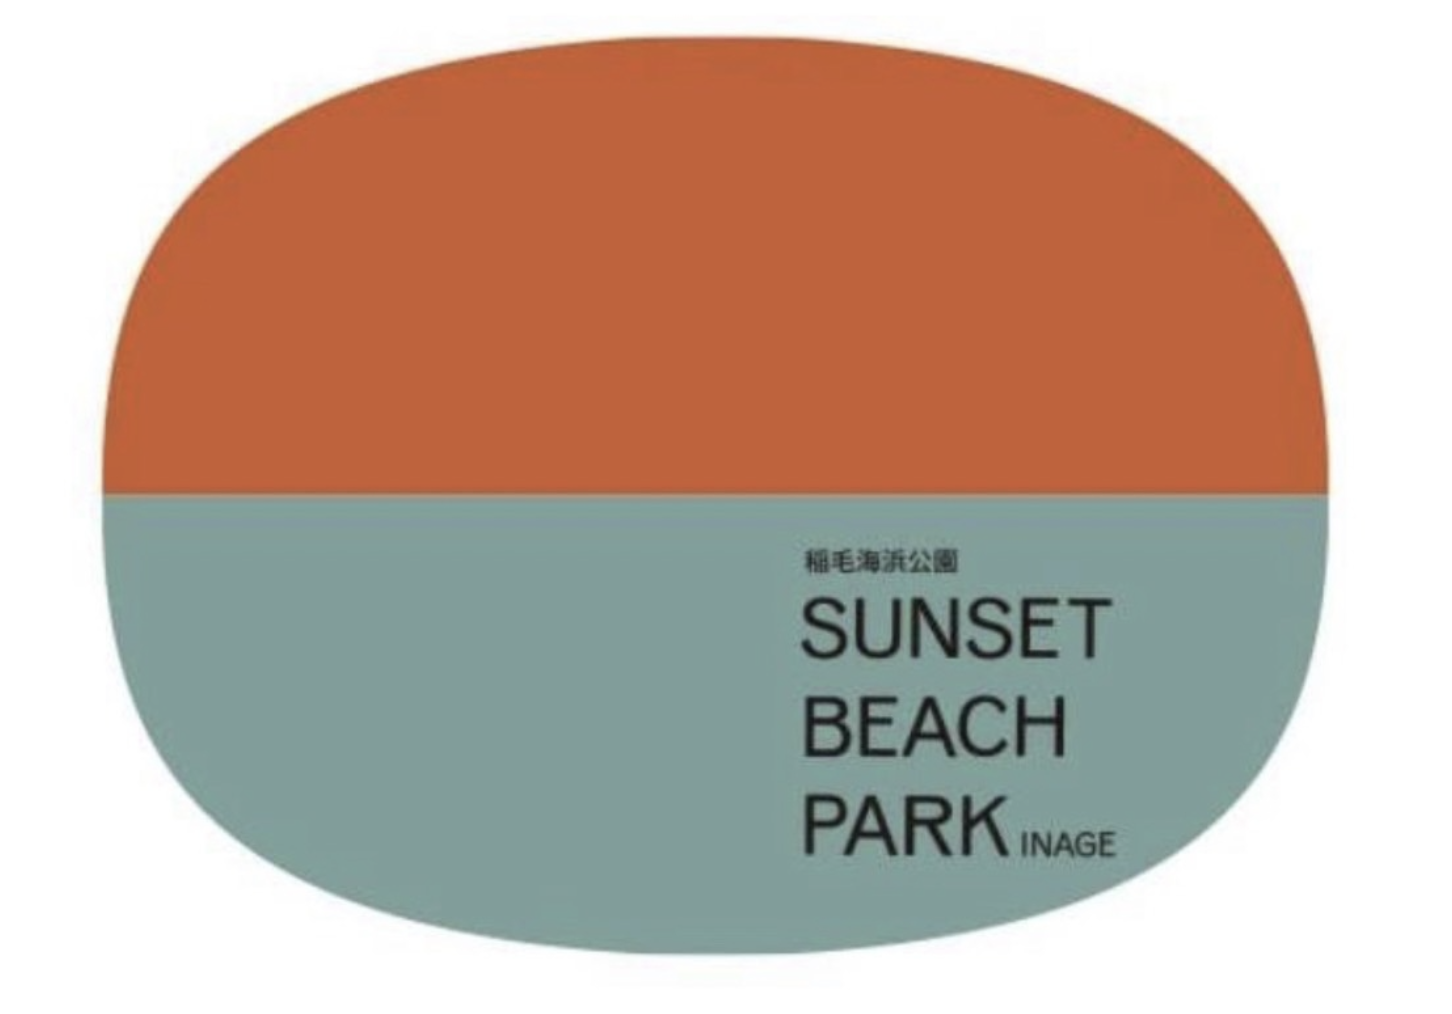 SUNSET BEACH PARK(稲毛海浜公園)